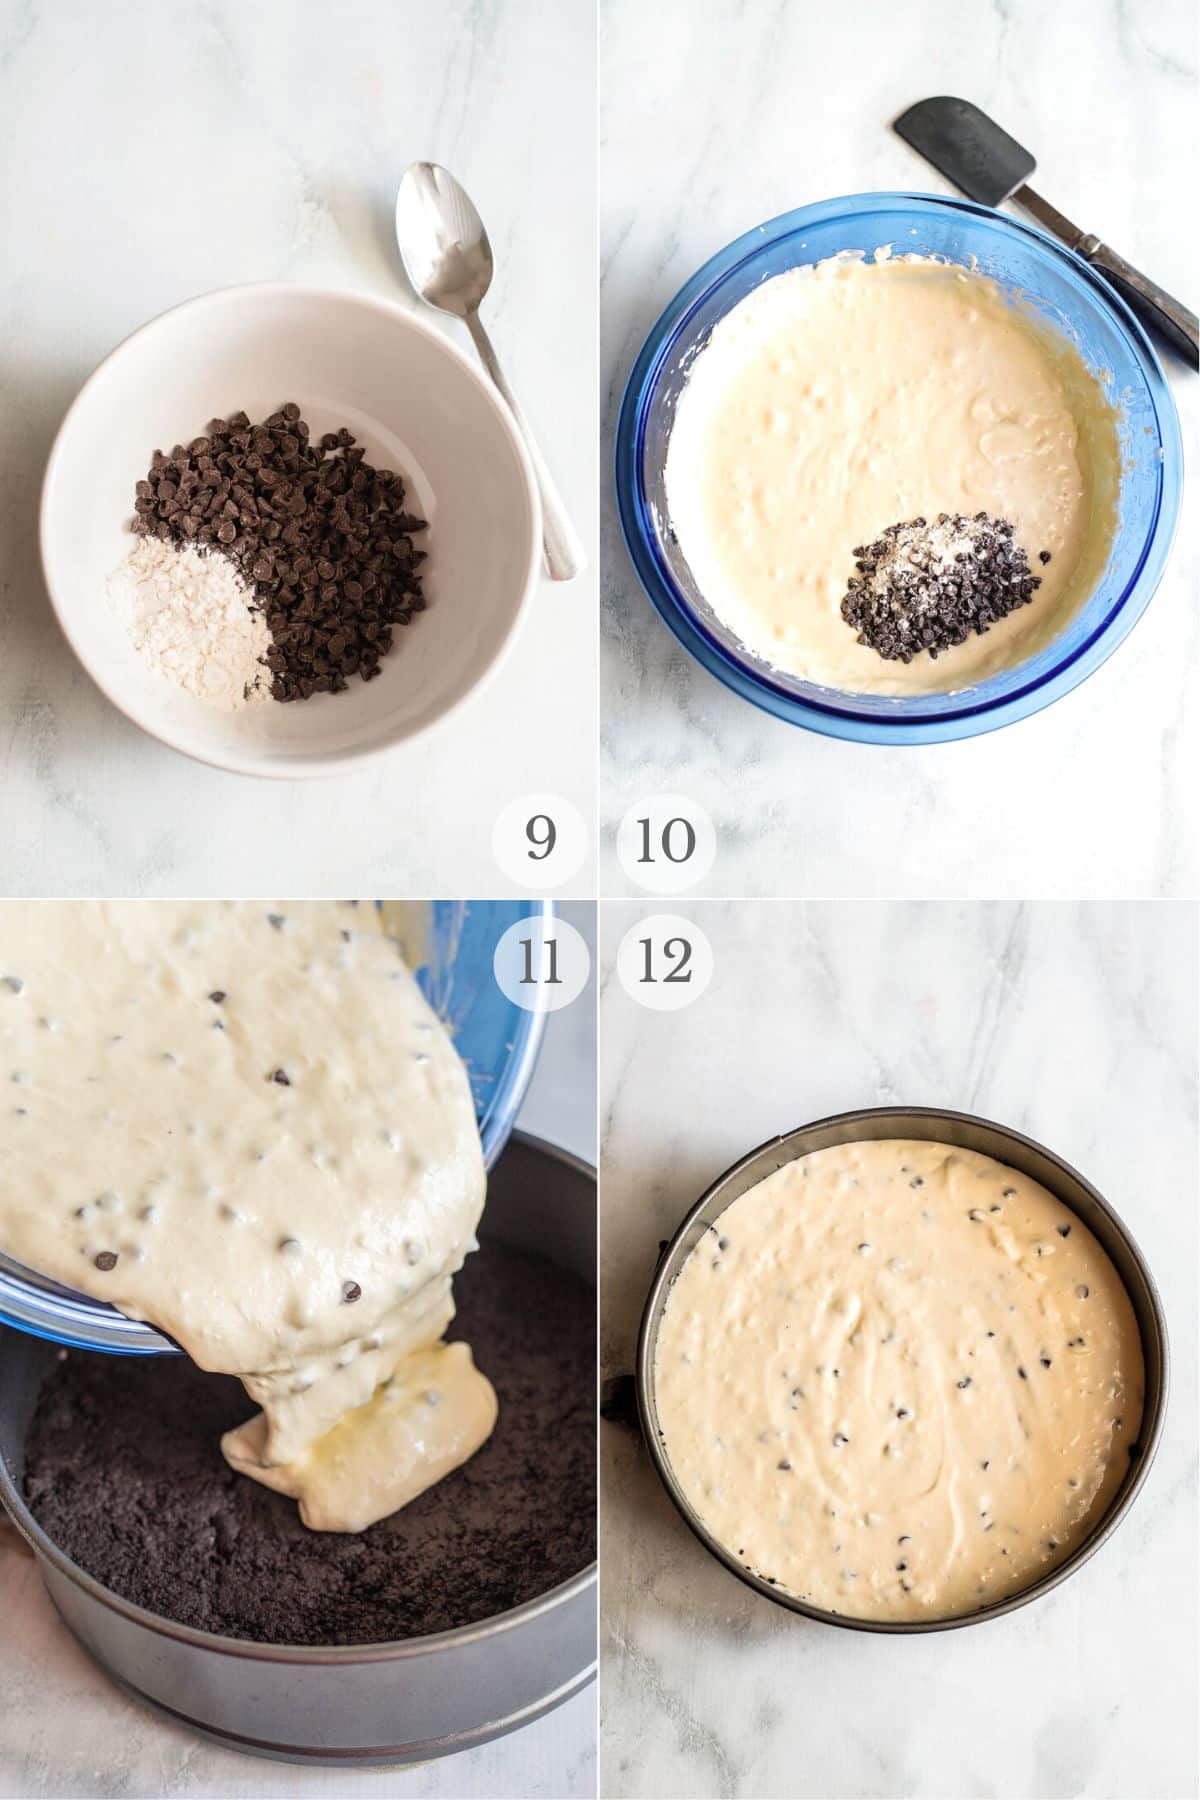 chocolate chip cheesecake recipe steps 9-12.